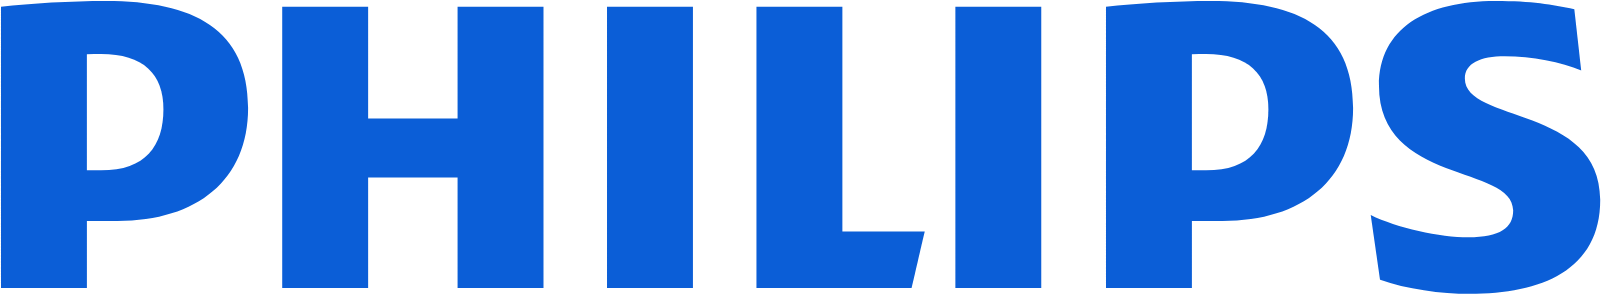 Philips logo large (transparent PNG)